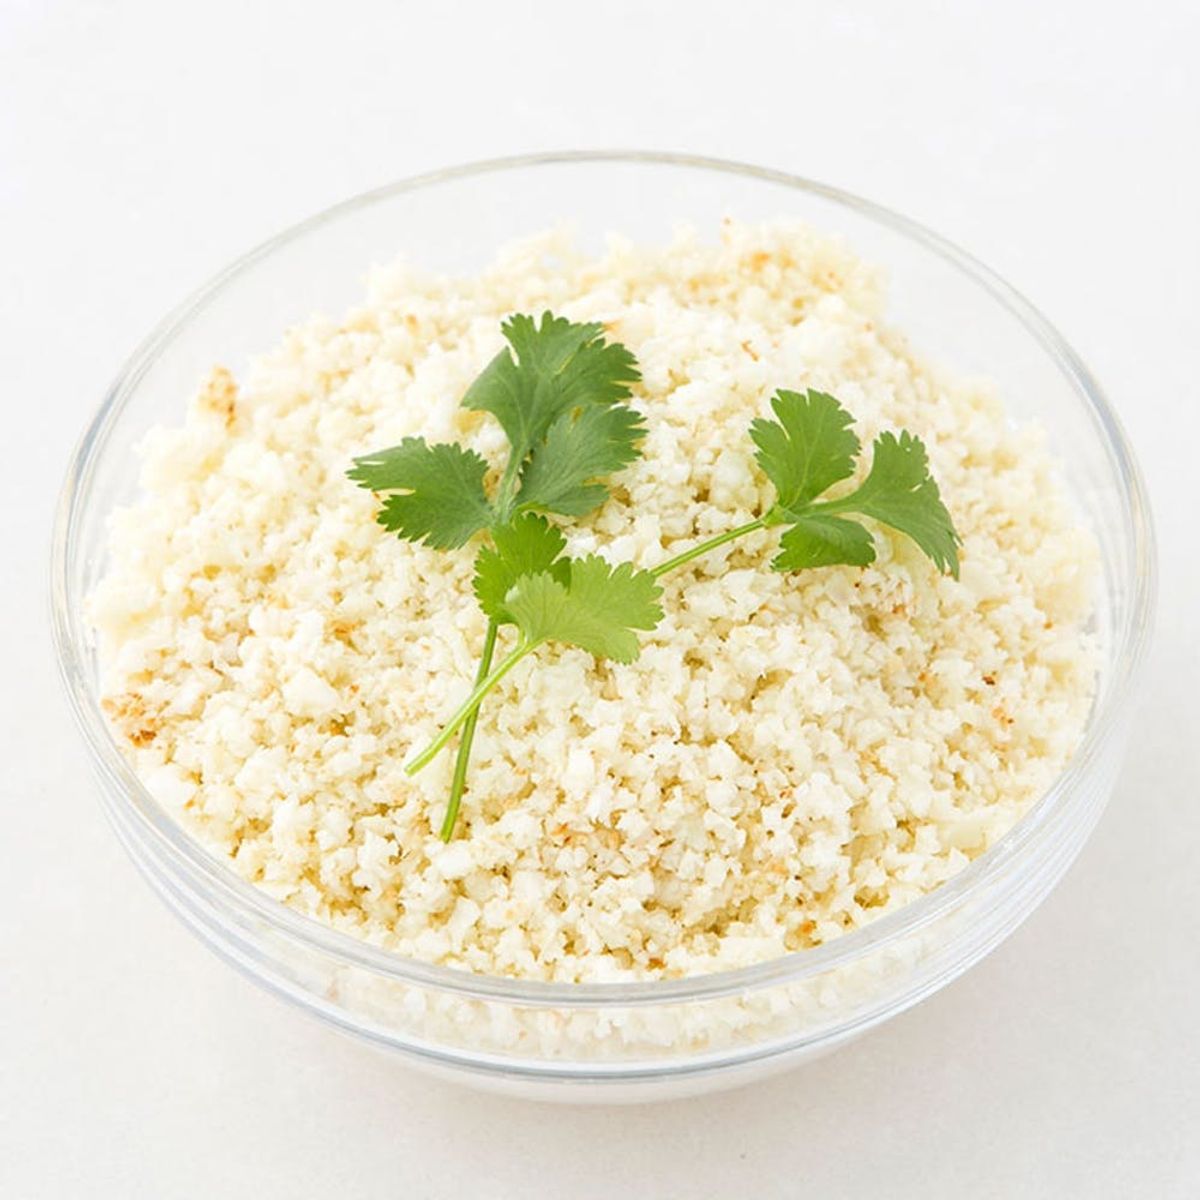 How to Make Homemade Cauliflower Rice, the Easy Way